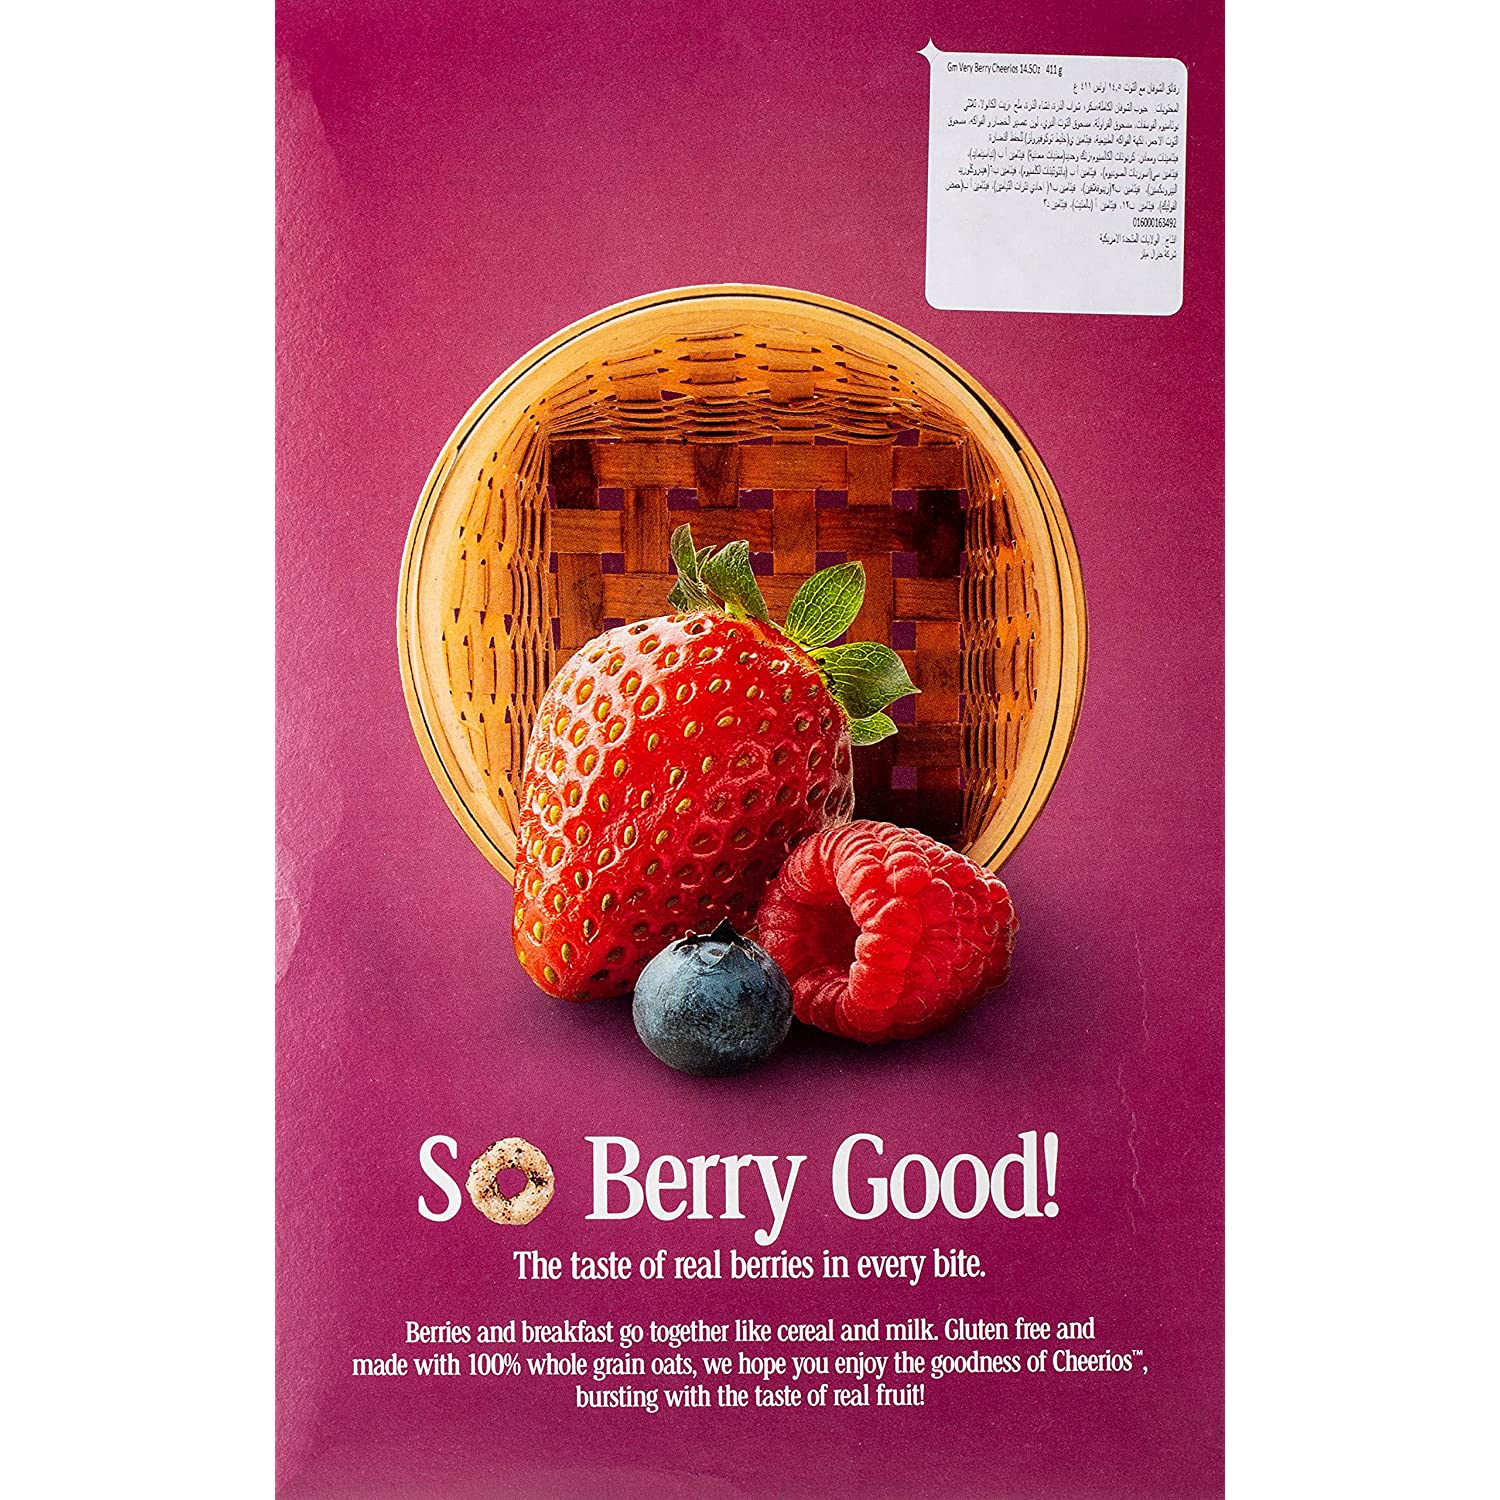 General Mills Cheerios Very Berry Real Fruit Cereal (411 g) General Mills